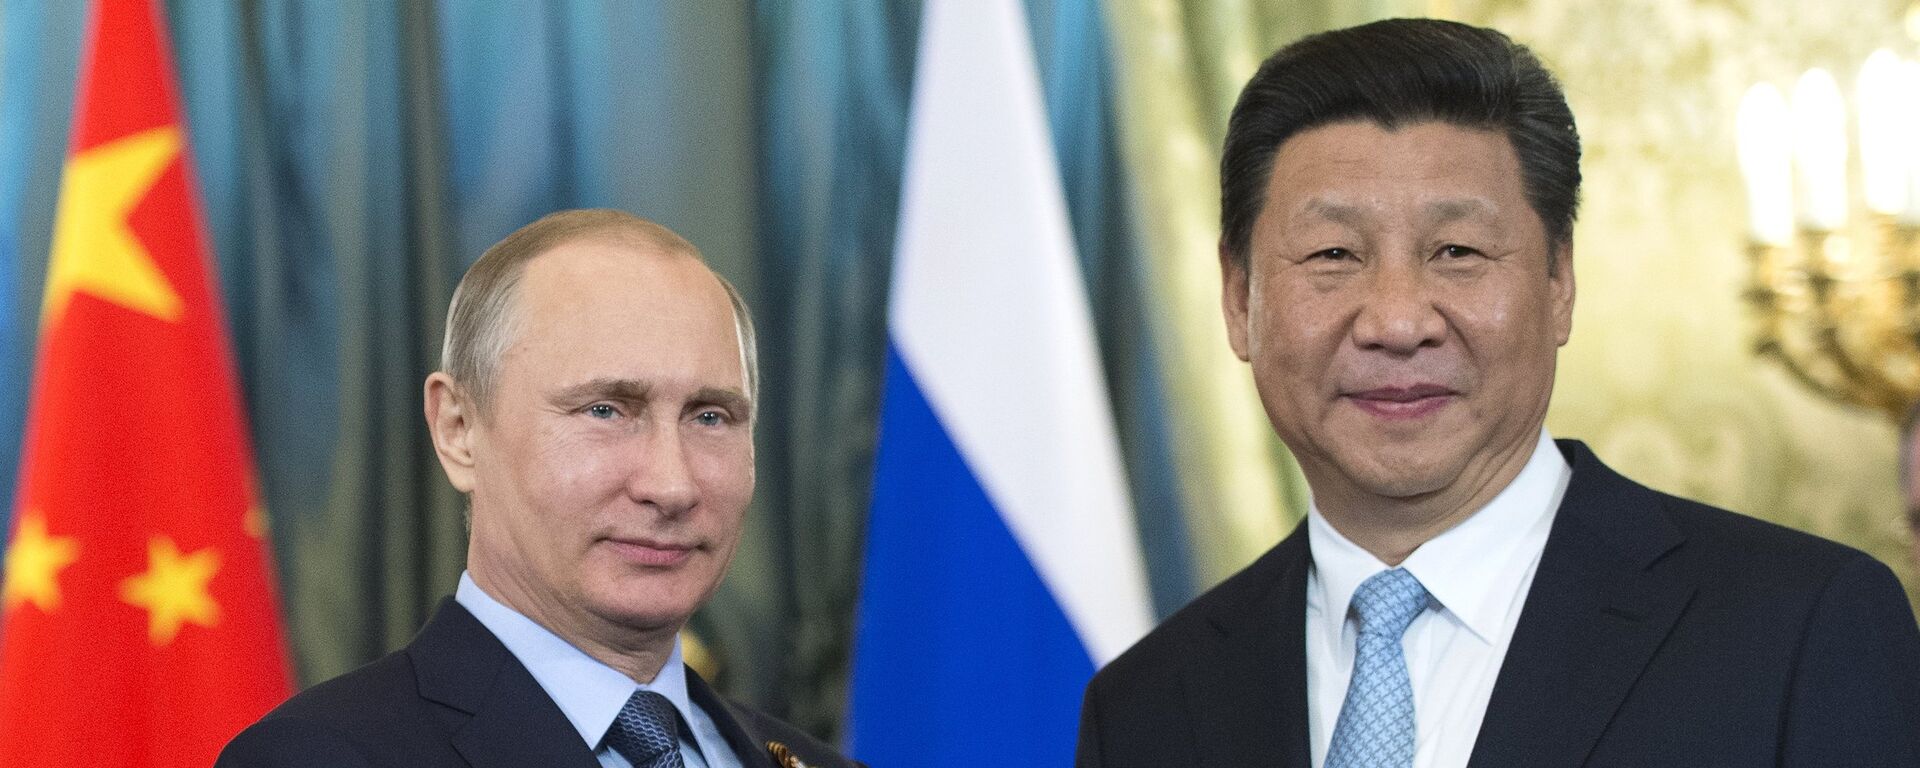 Vladimir Putin e Xi Jinping durante um encontro no Kremlin - Sputnik Brasil, 1920, 25.08.2021